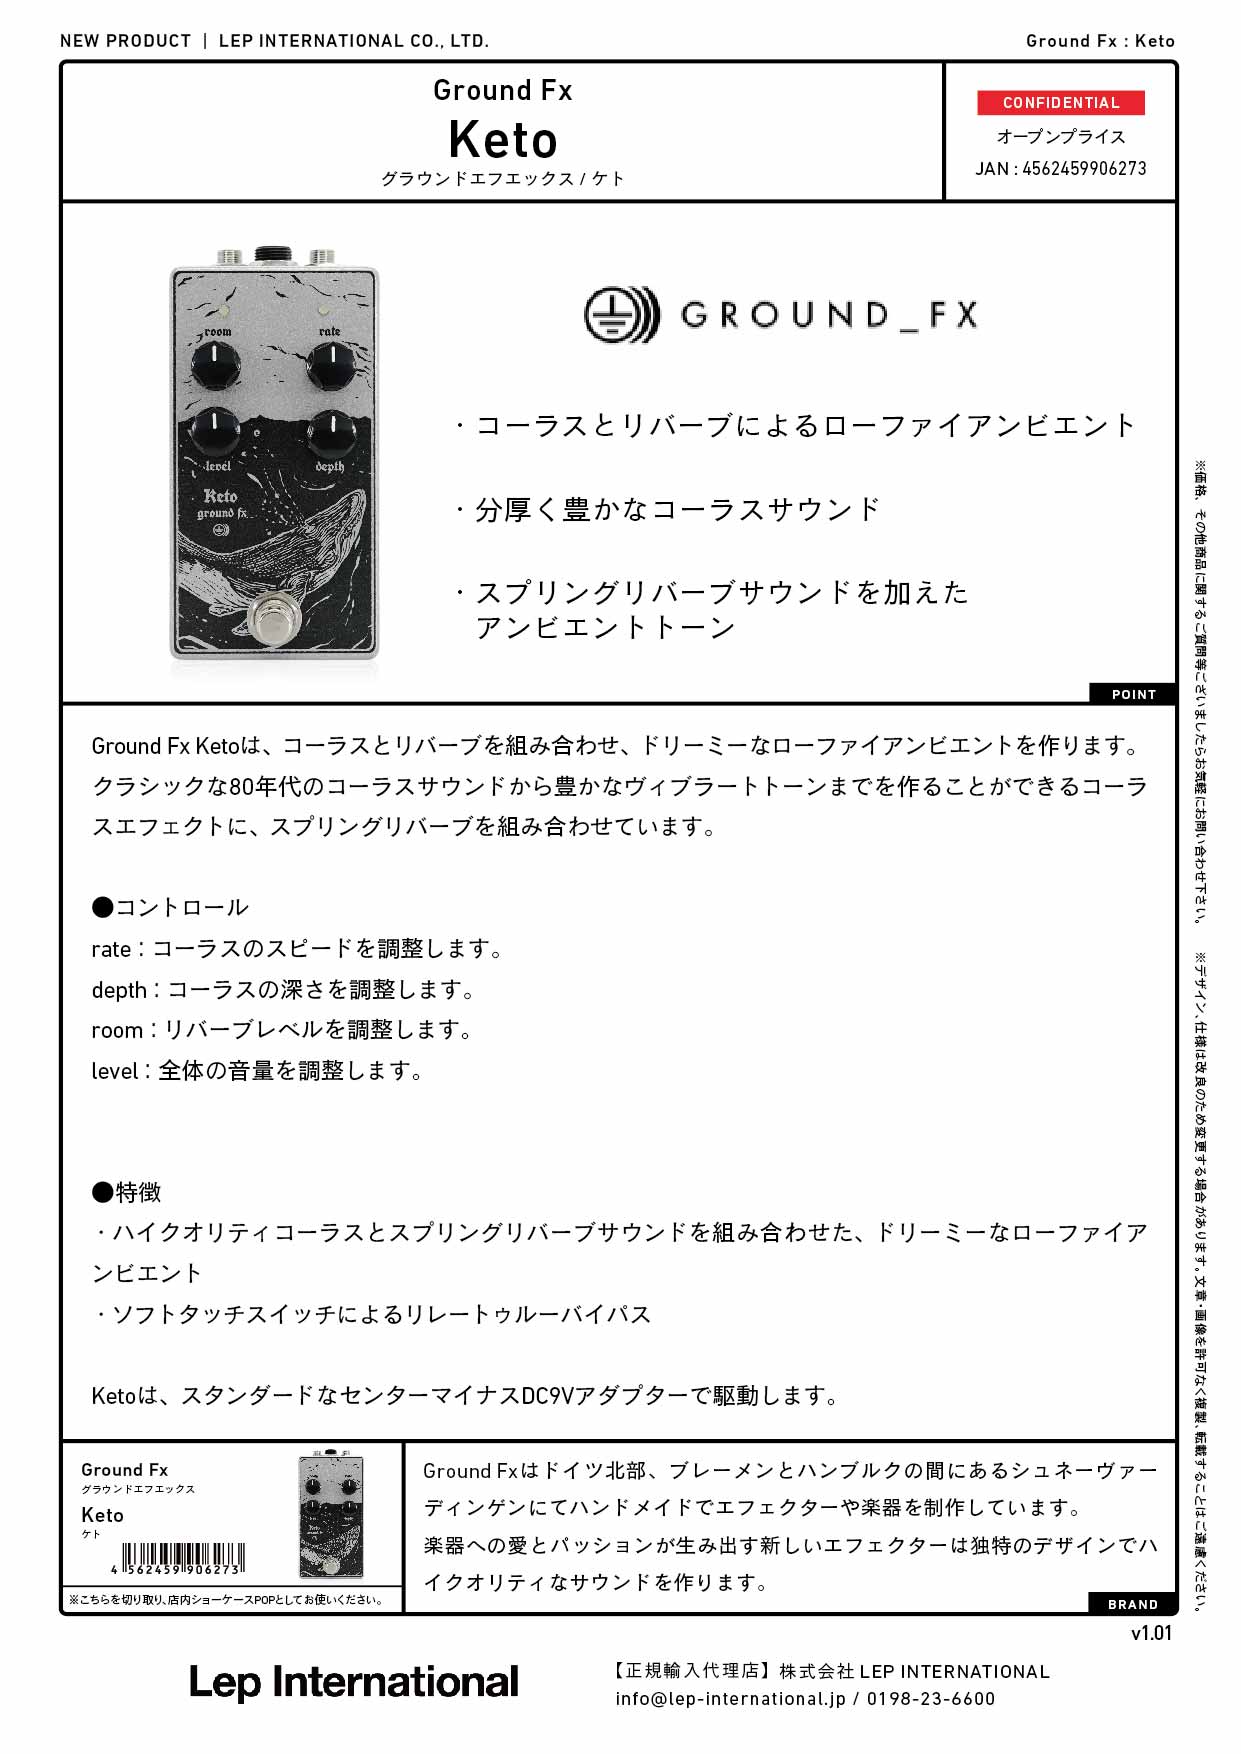 Ground Fx/Keto